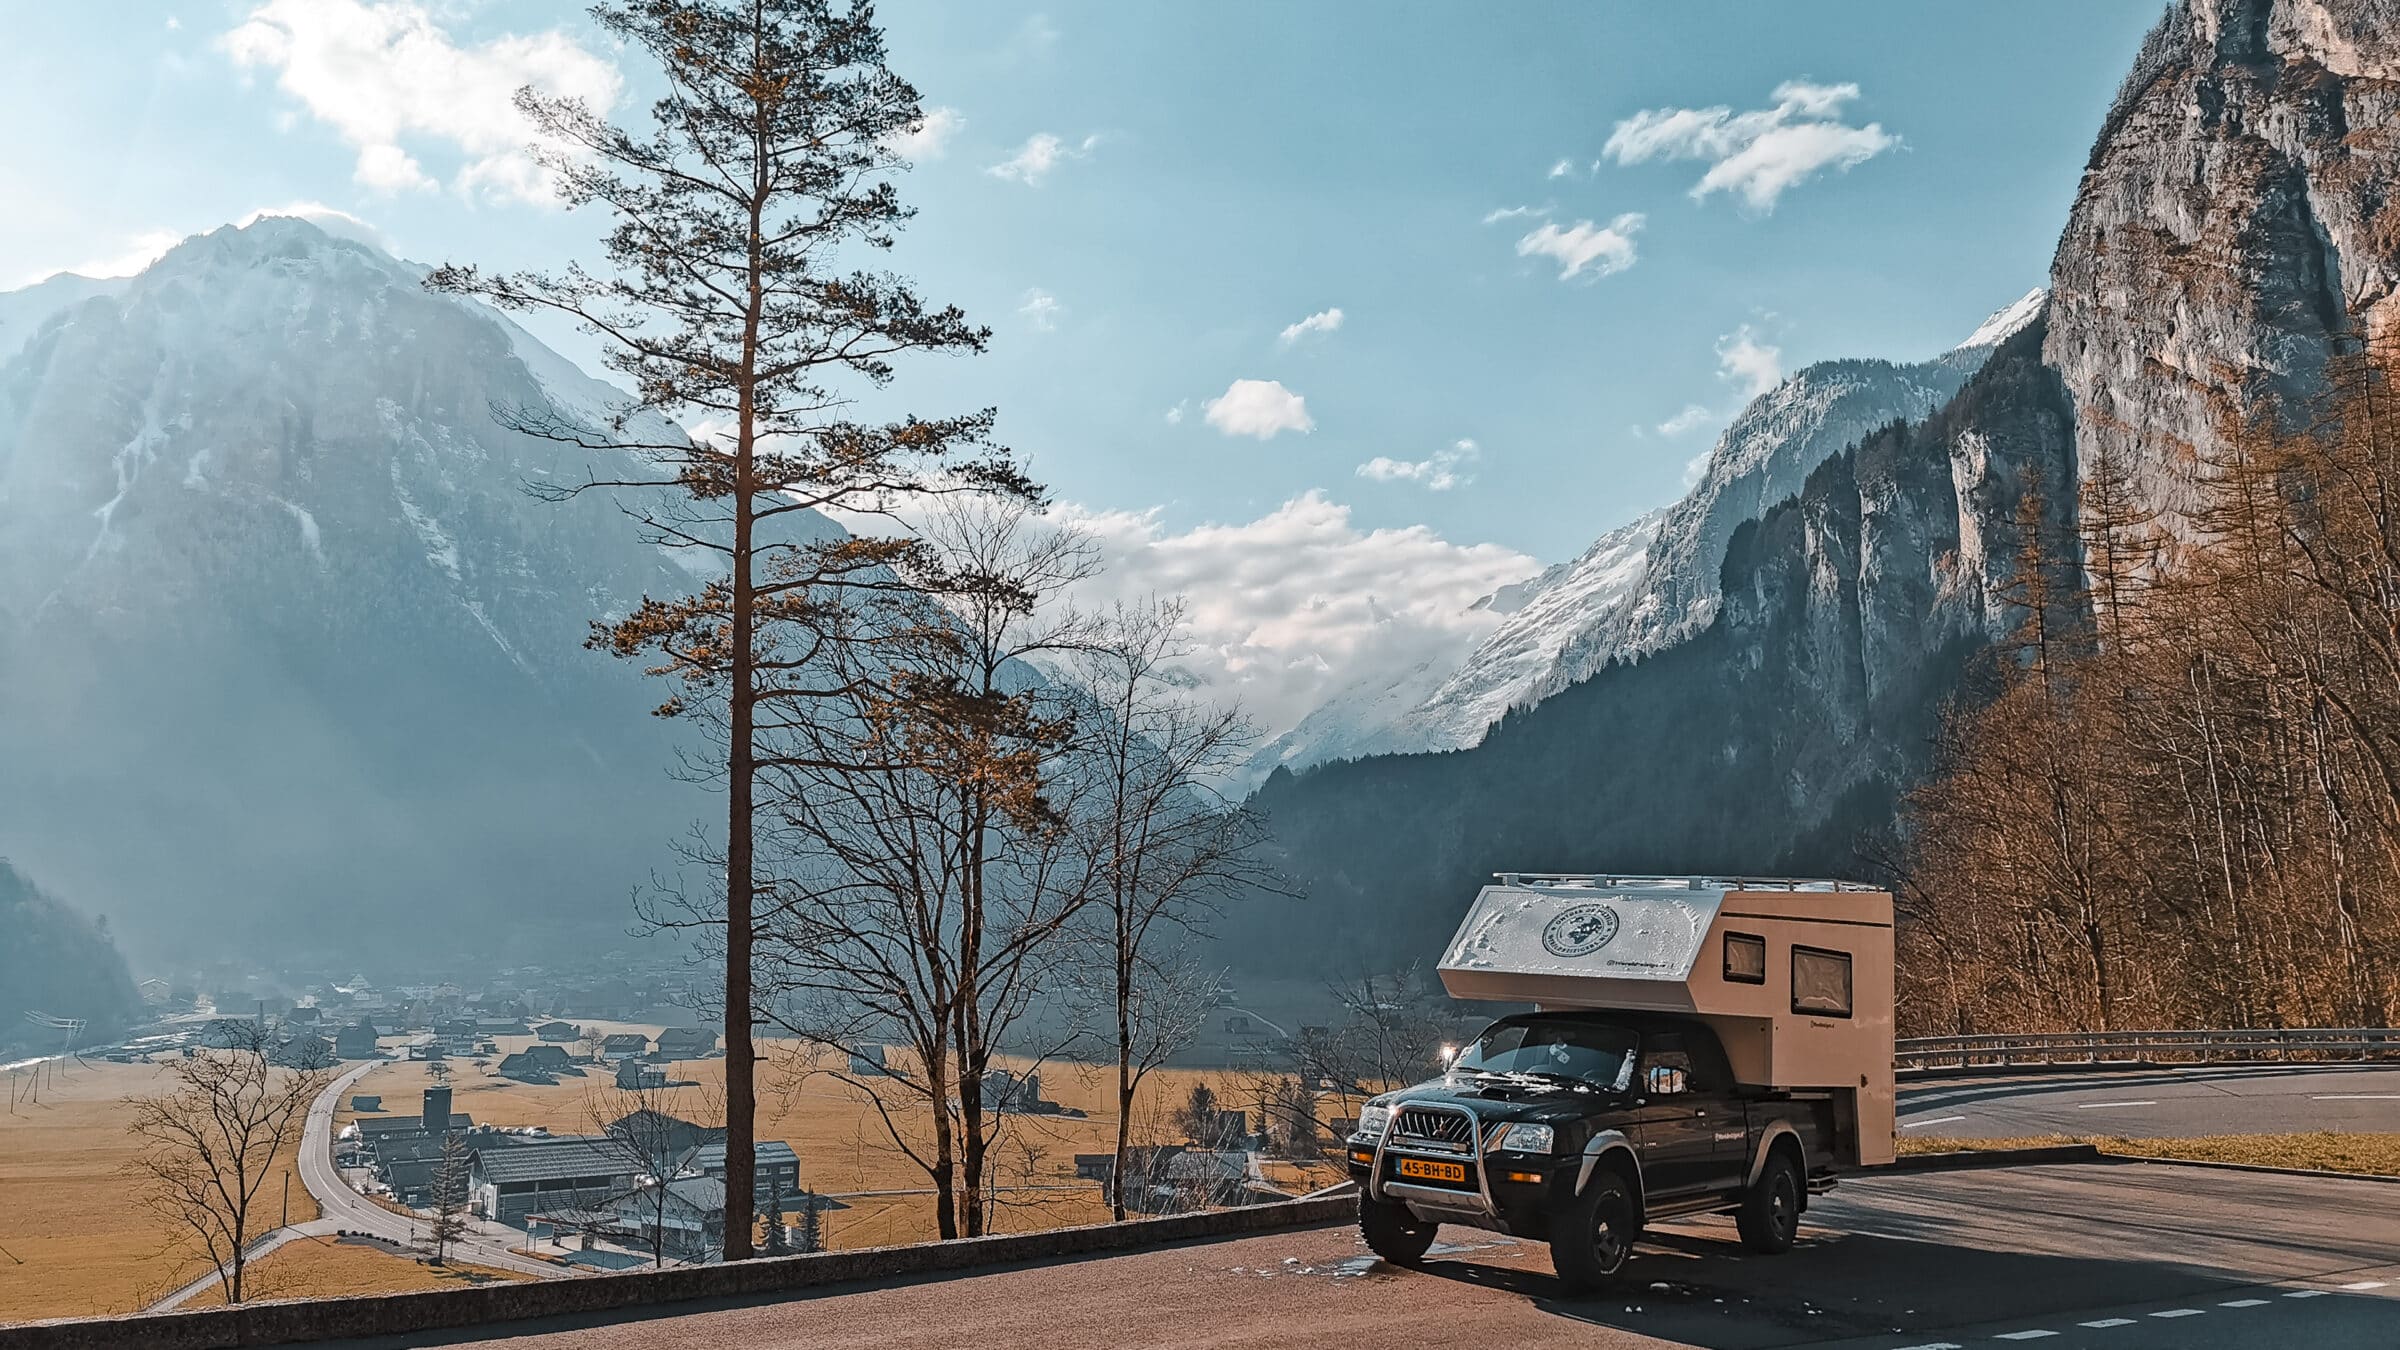 The world travelers 4x4 camper during the roadtrip through Switzerland